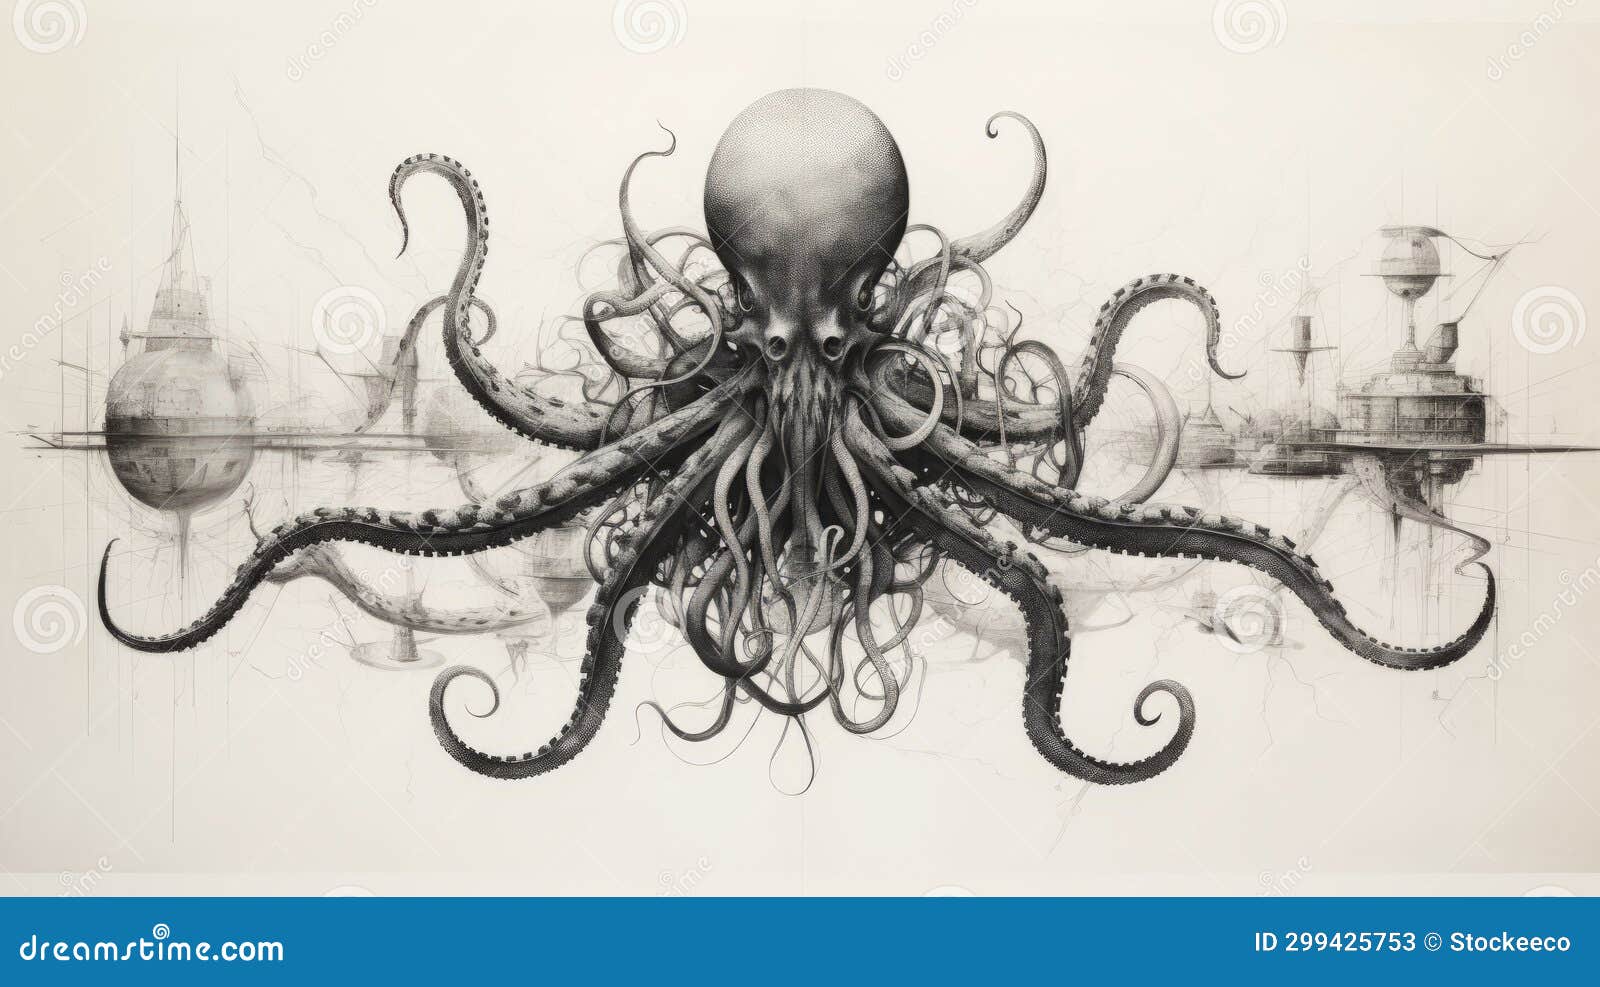 octopus aqua tattoo by Wolfaya -- Fur Affinity [dot] net